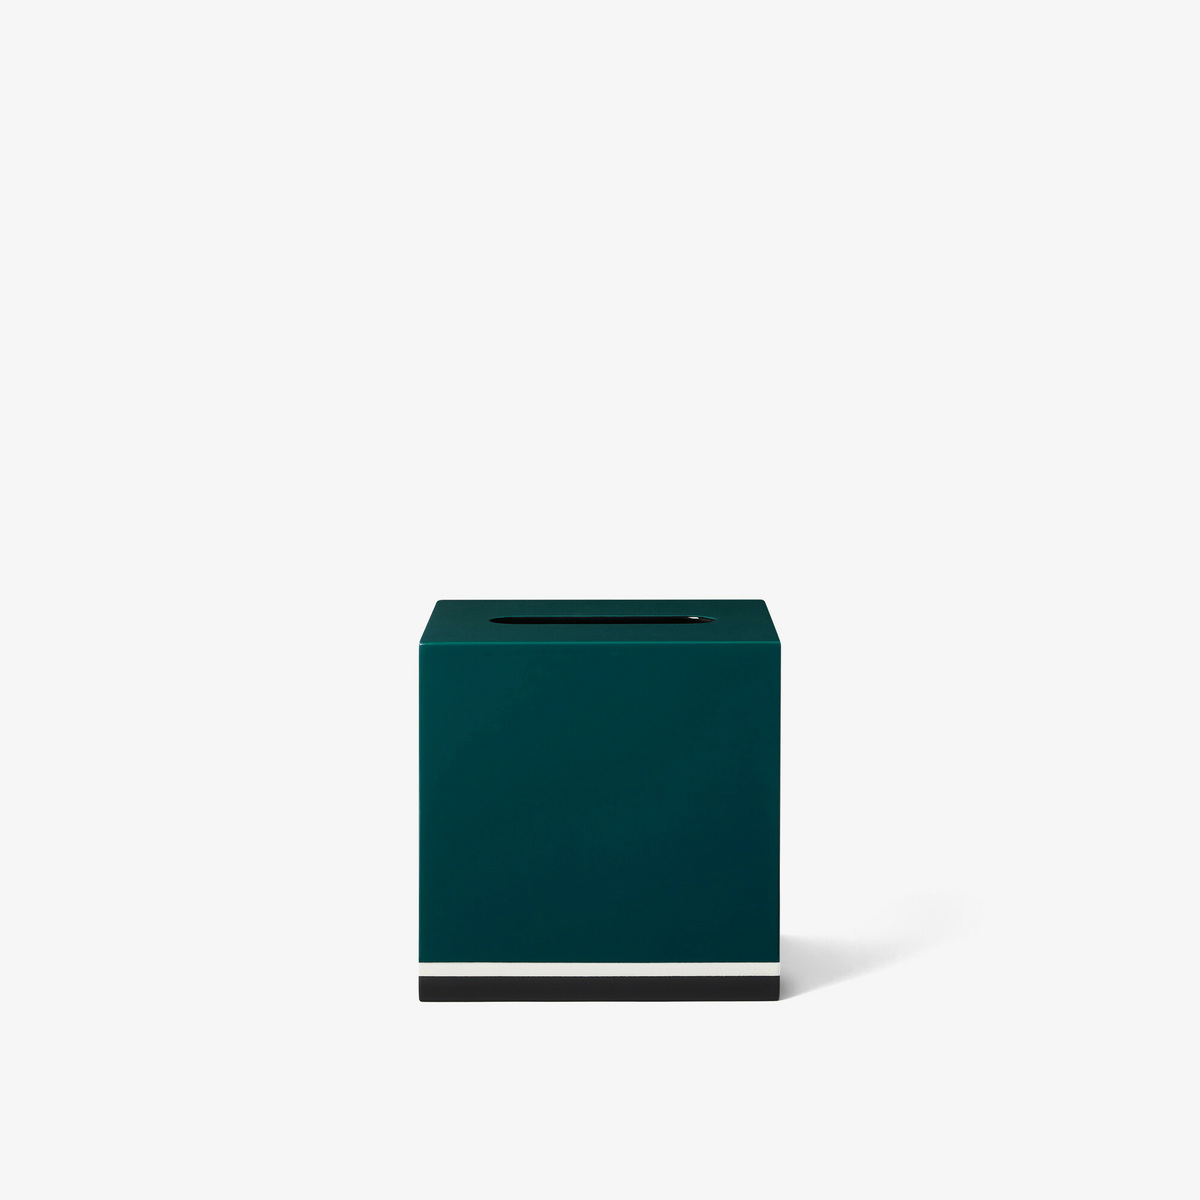 Little tissue box, Sarah Blue - 15x15cm - Lacquered wood - image 2